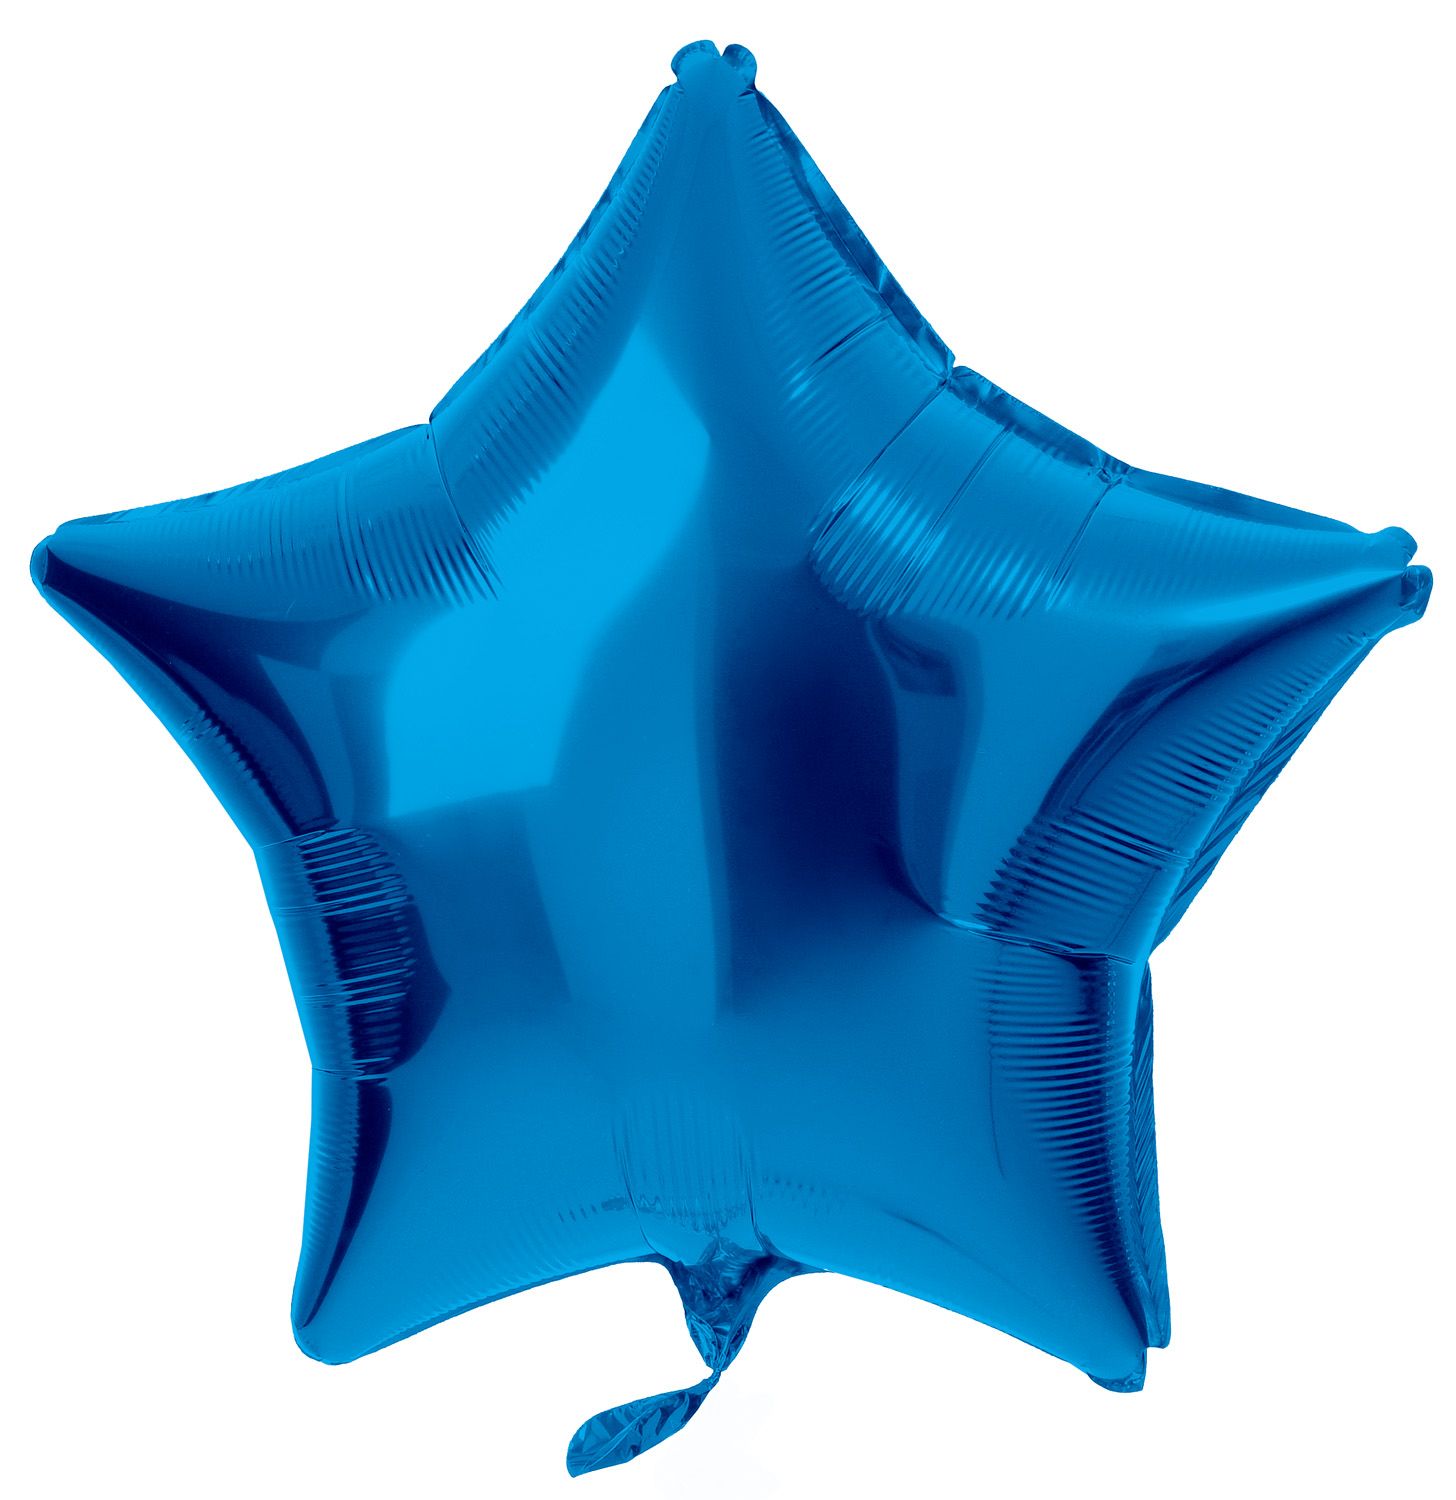 Folieballon stervorm blauw